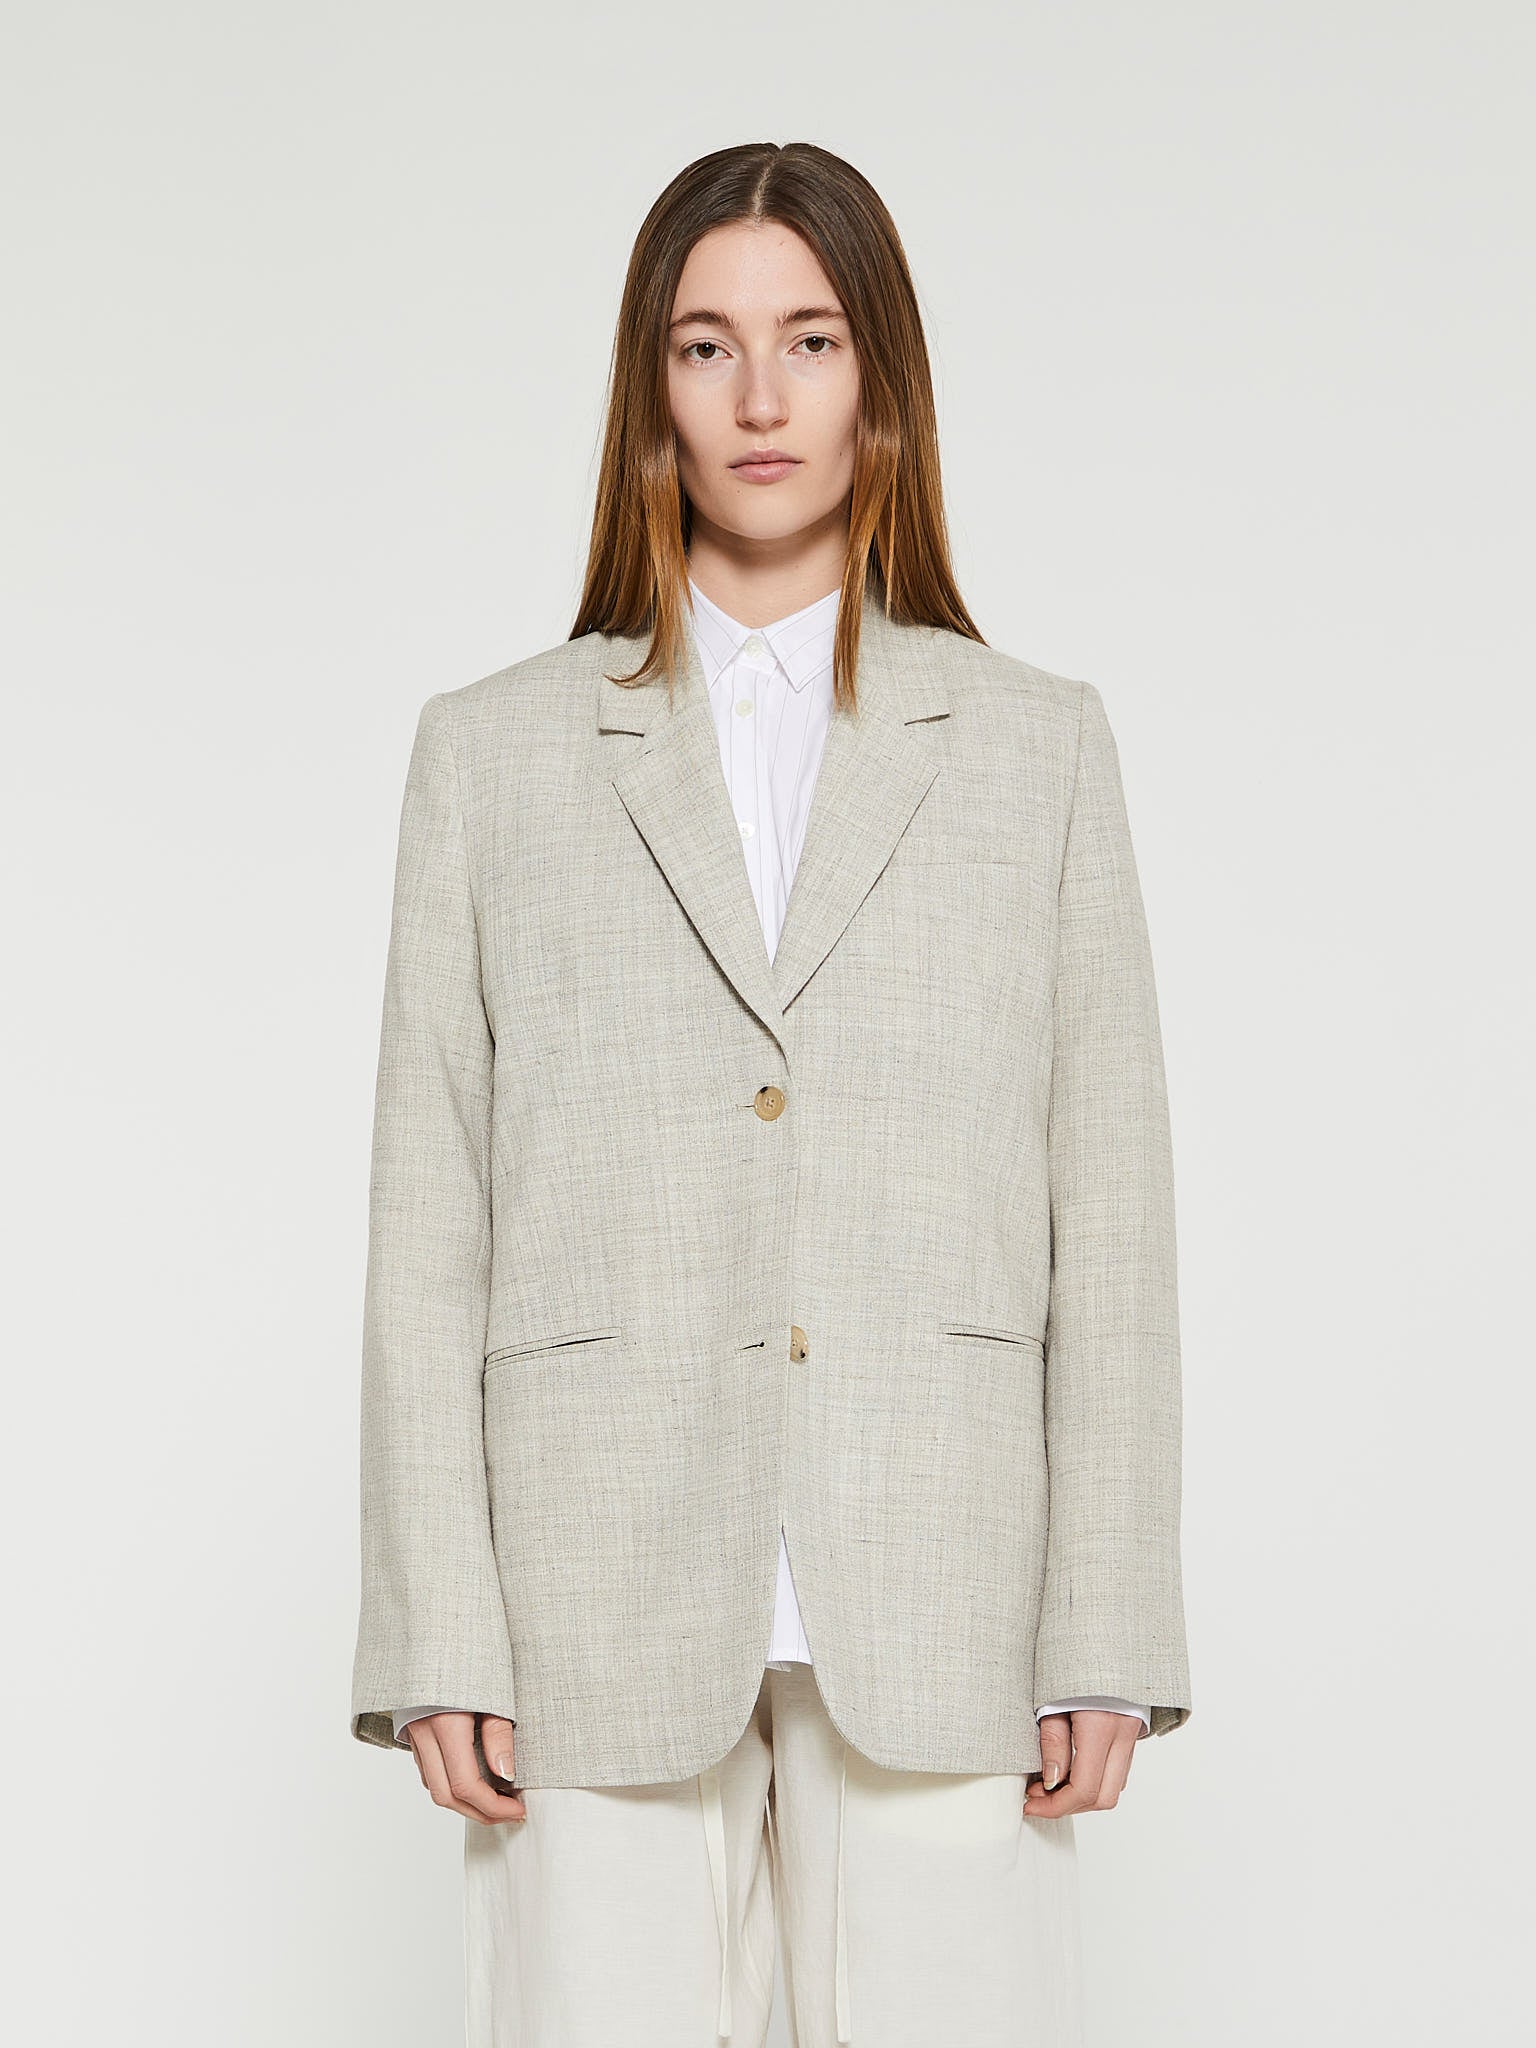 Toteme - Tailored Suit Jacket in Oat Melange